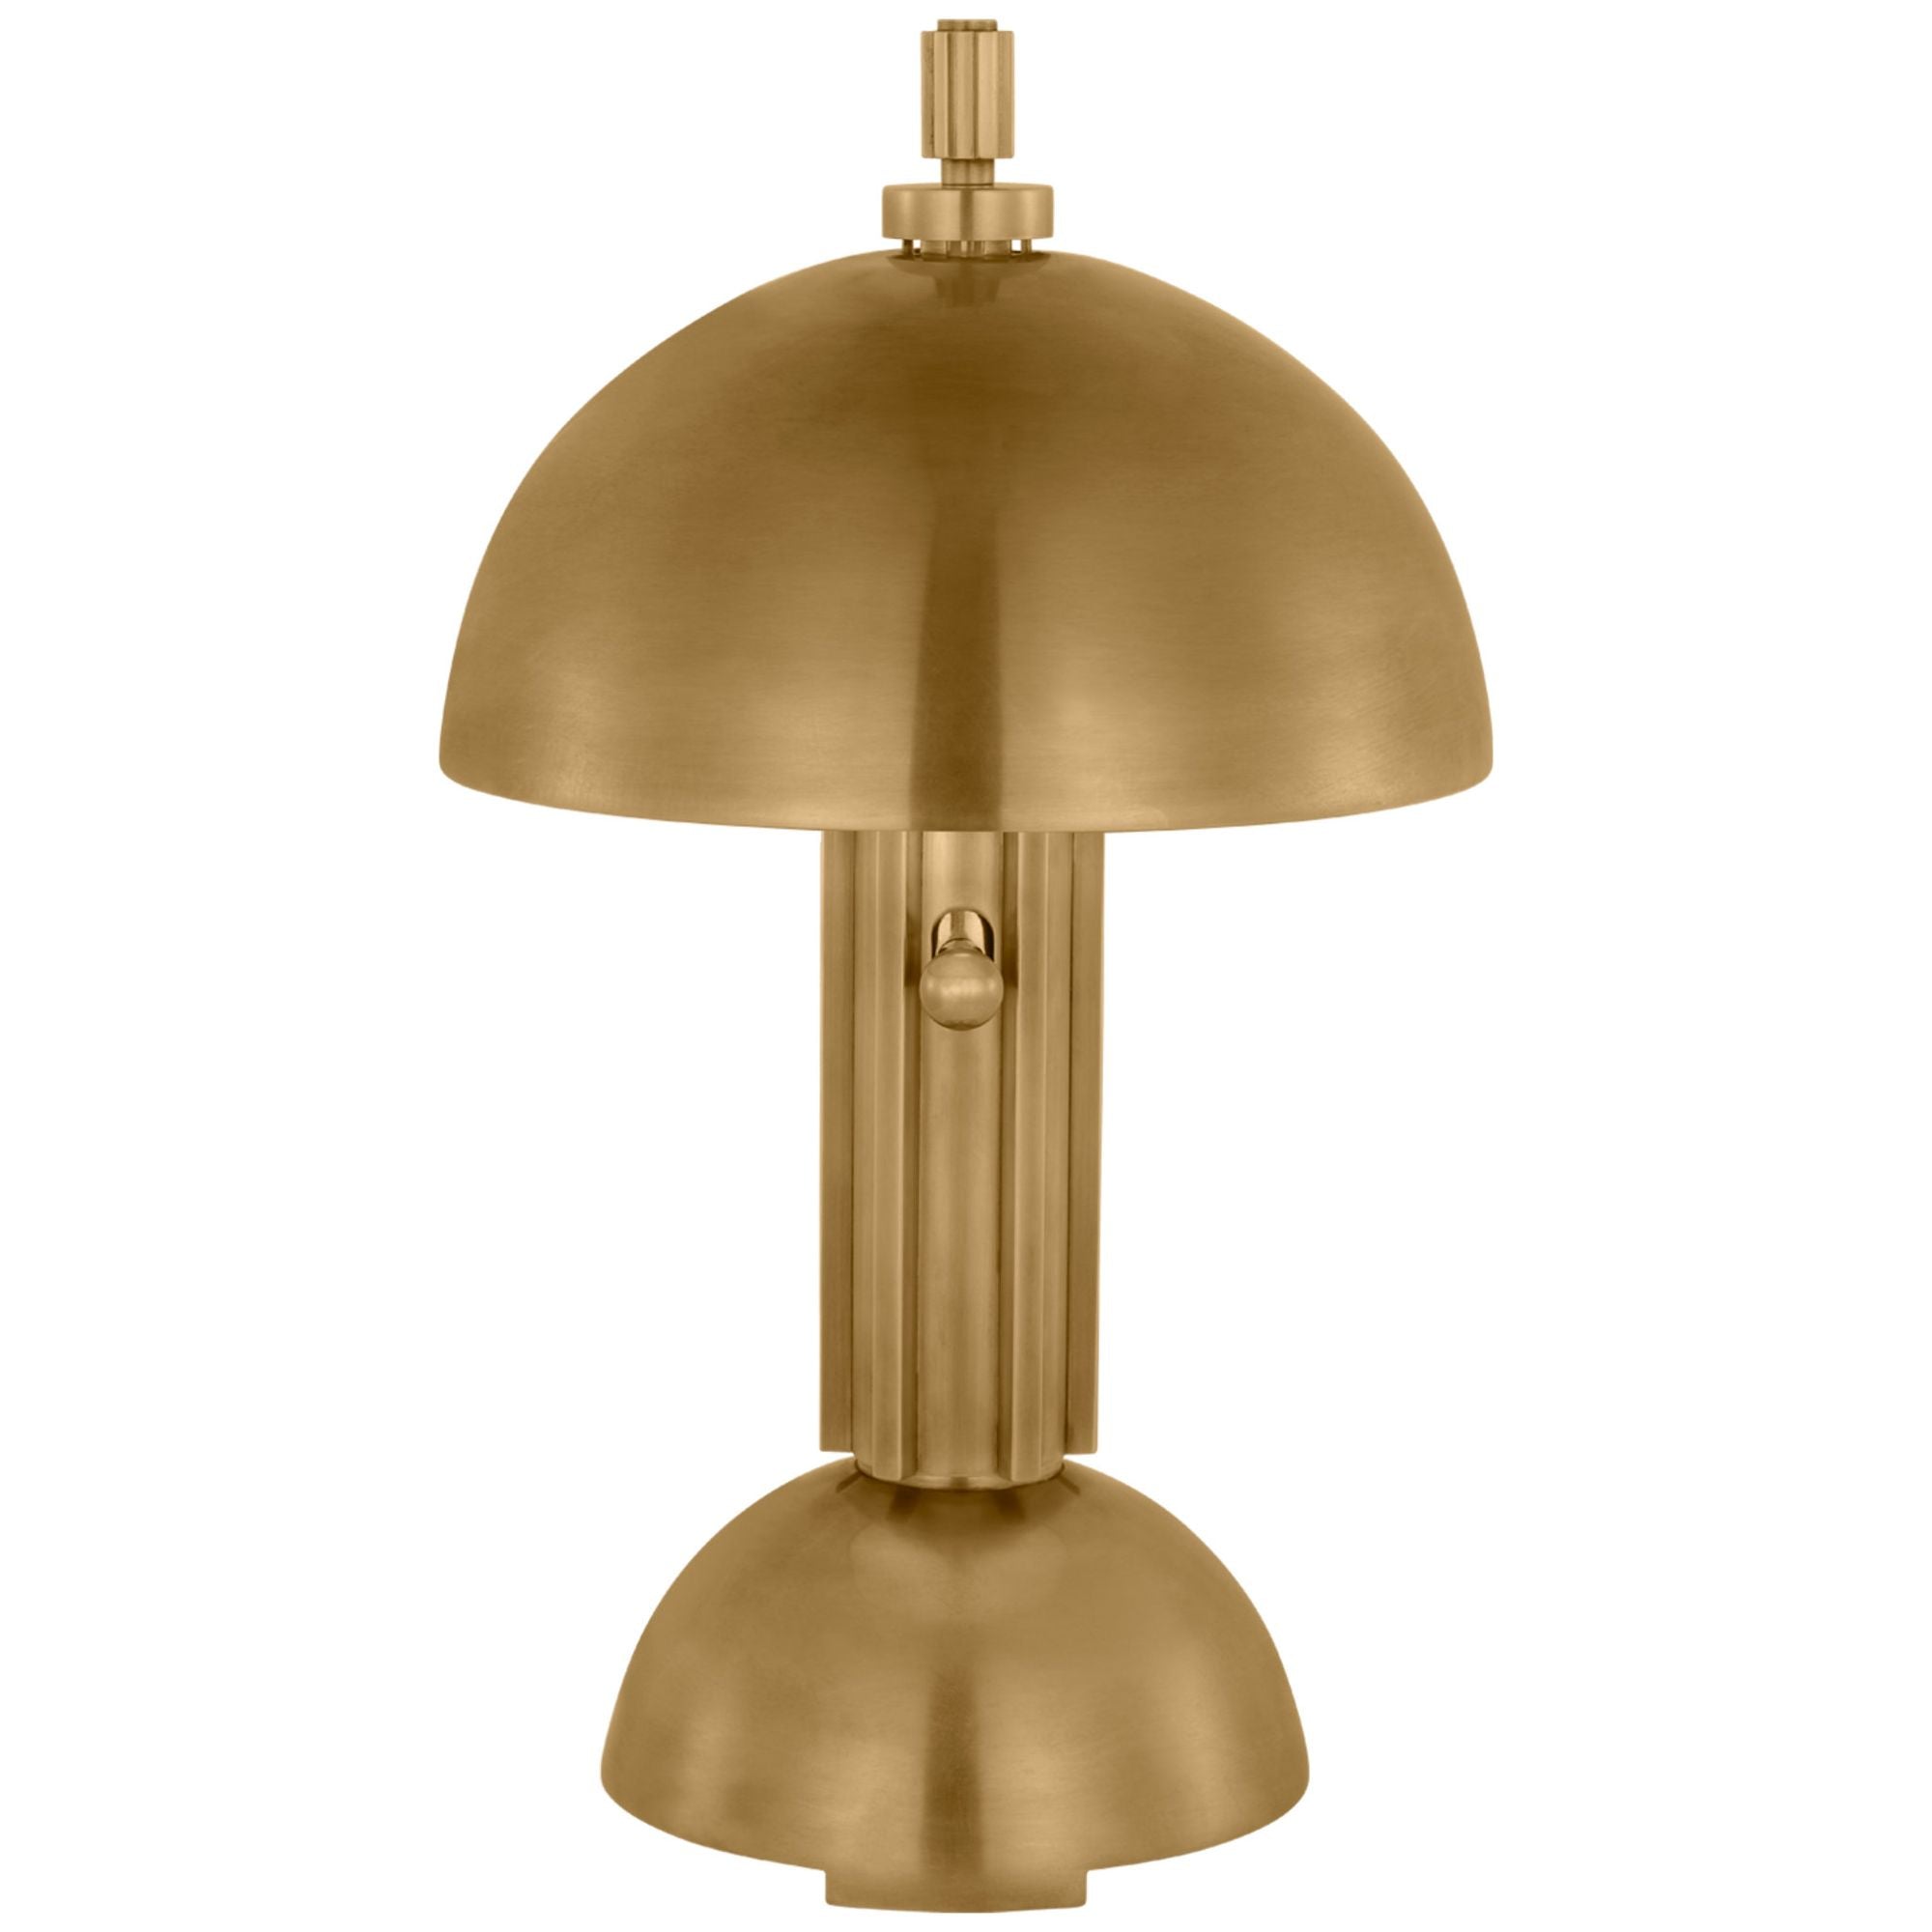 Thomas O'Brien Dally 13 Desk Lamp in Hand-Rubbed Antique Brass